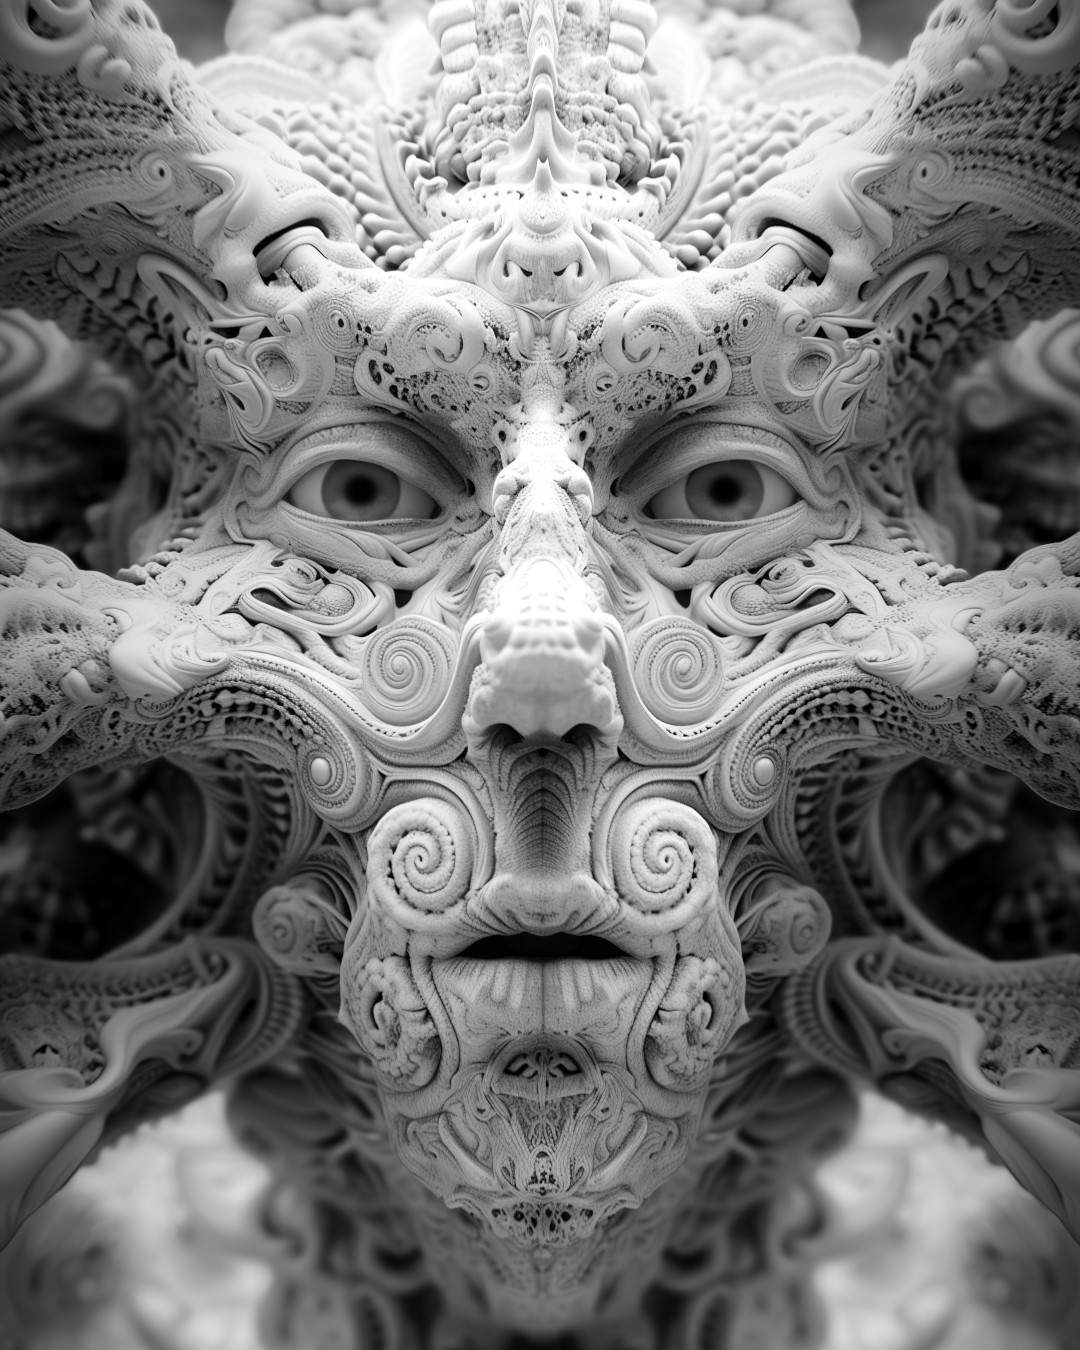 Symmetrical face, swirling patterns, monochrome